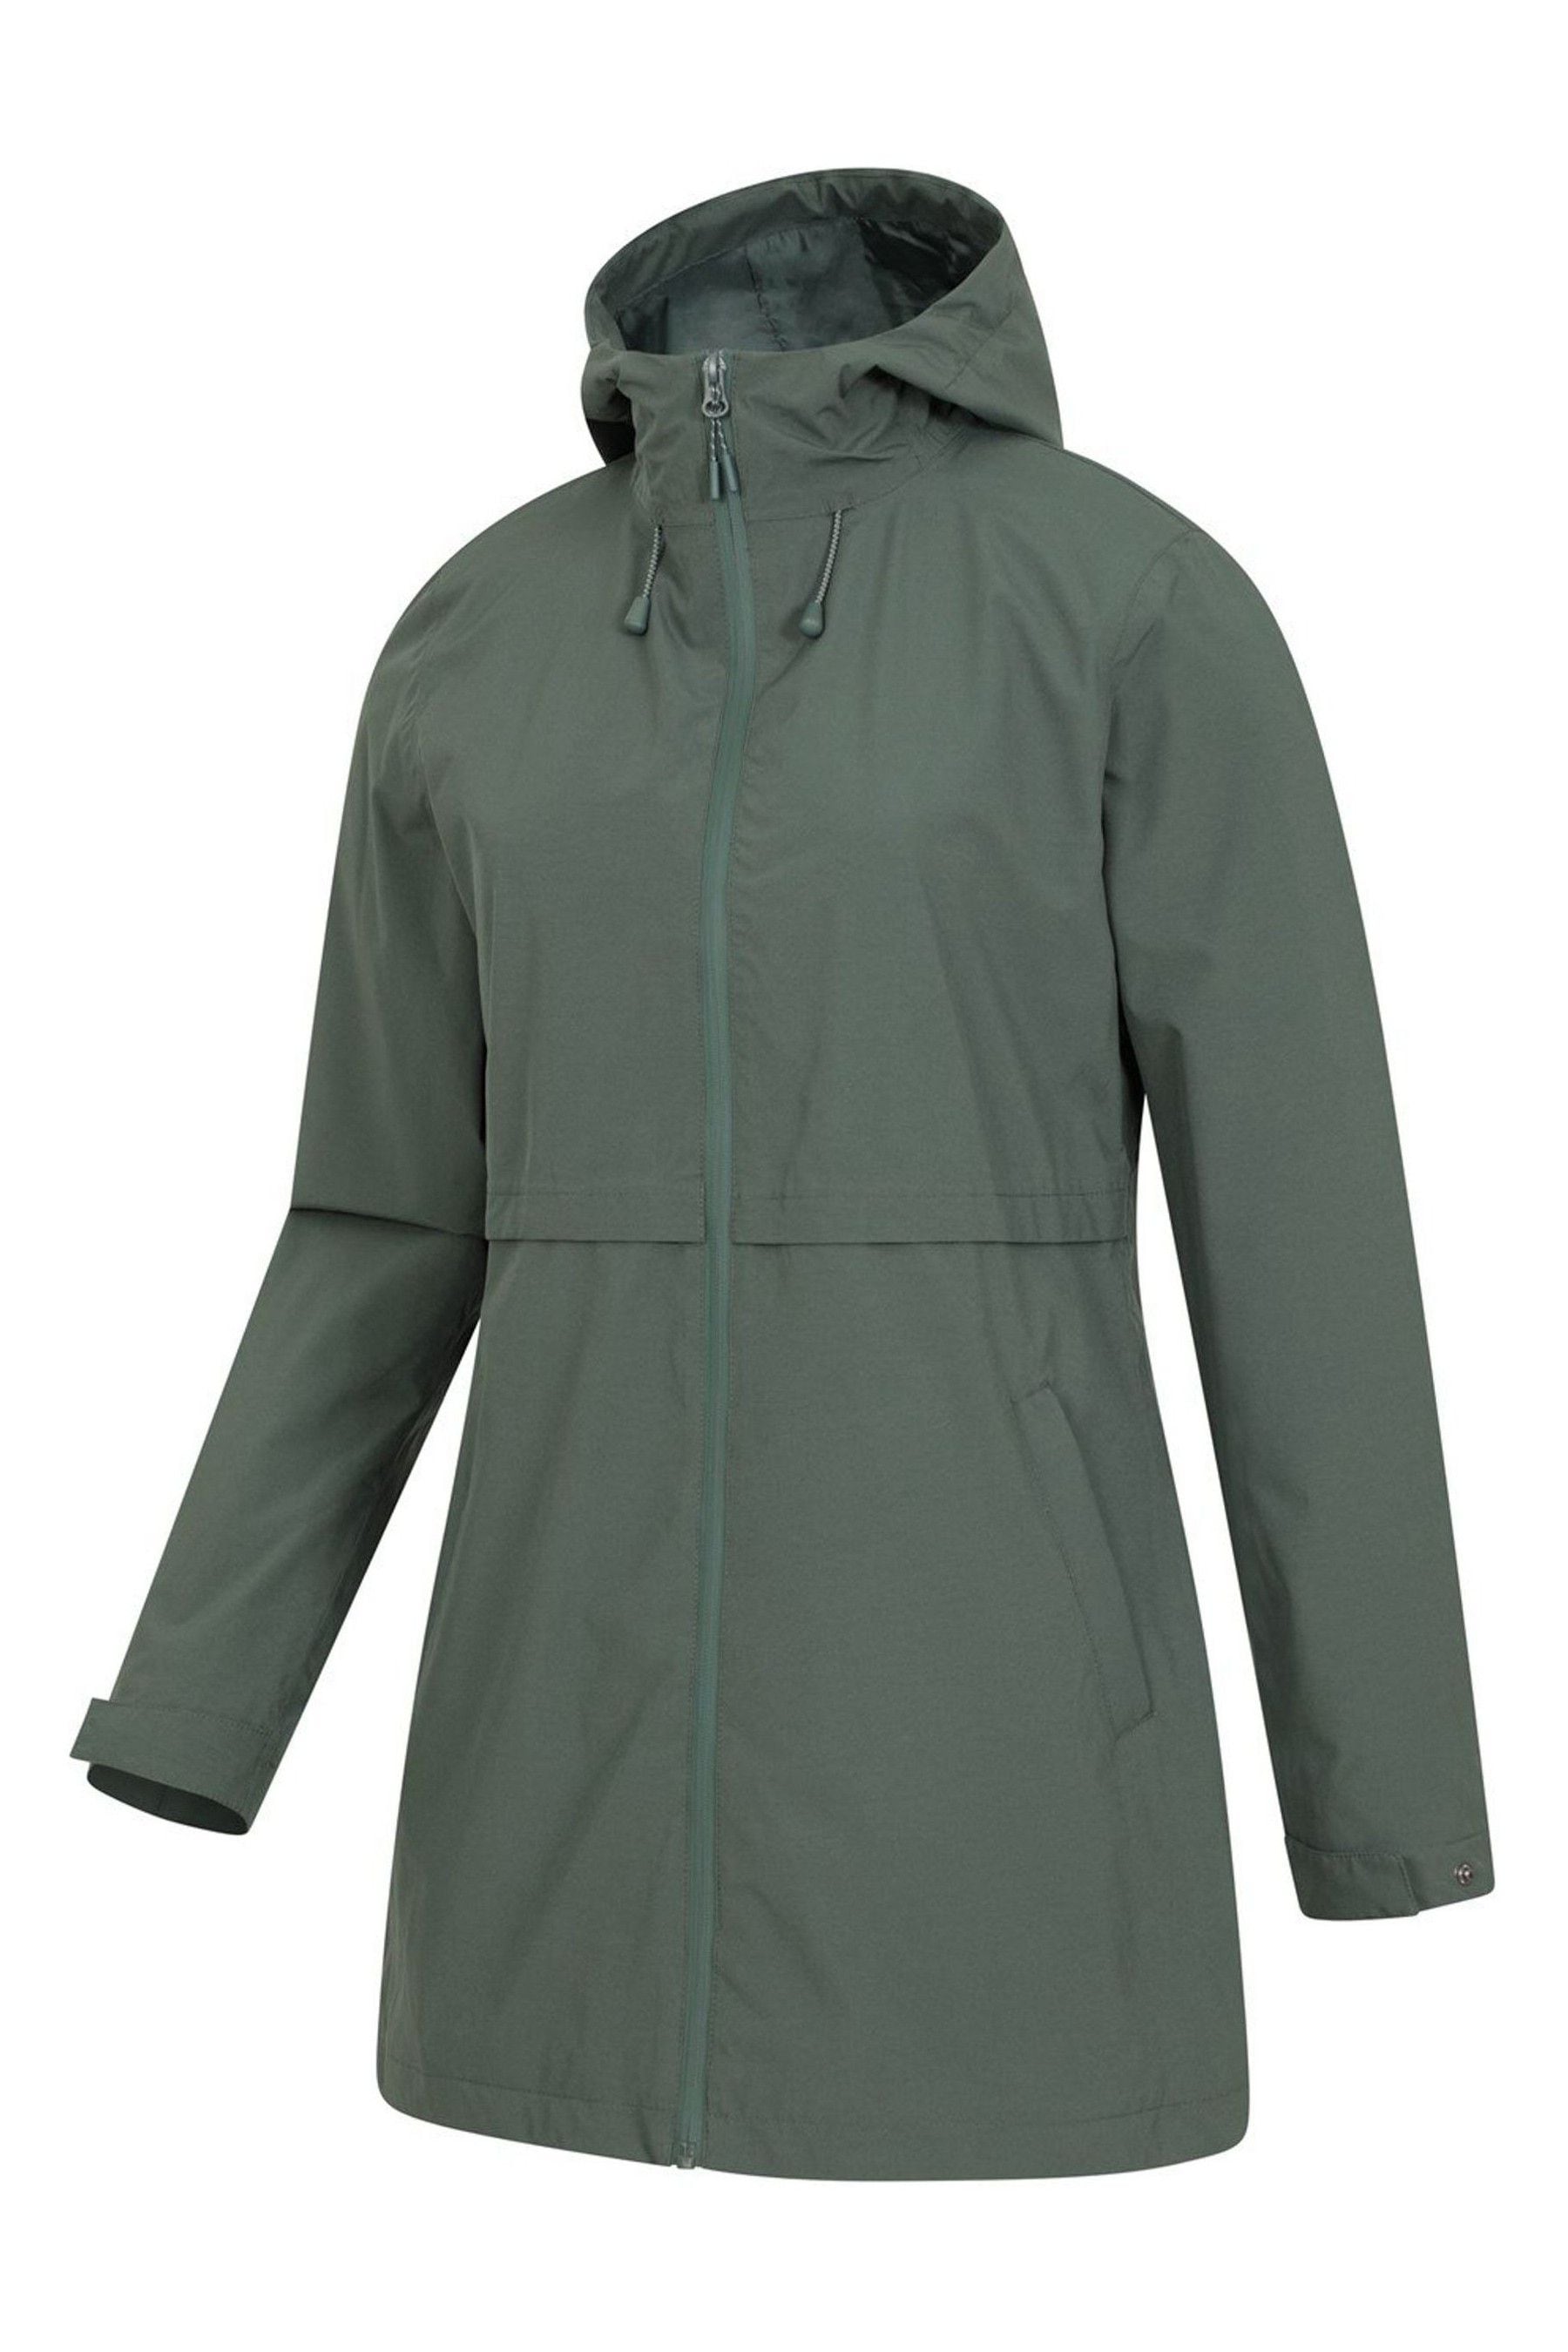 Buy Mountain Warehouse Hilltop Womens Waterproof Jacket from Next Ireland